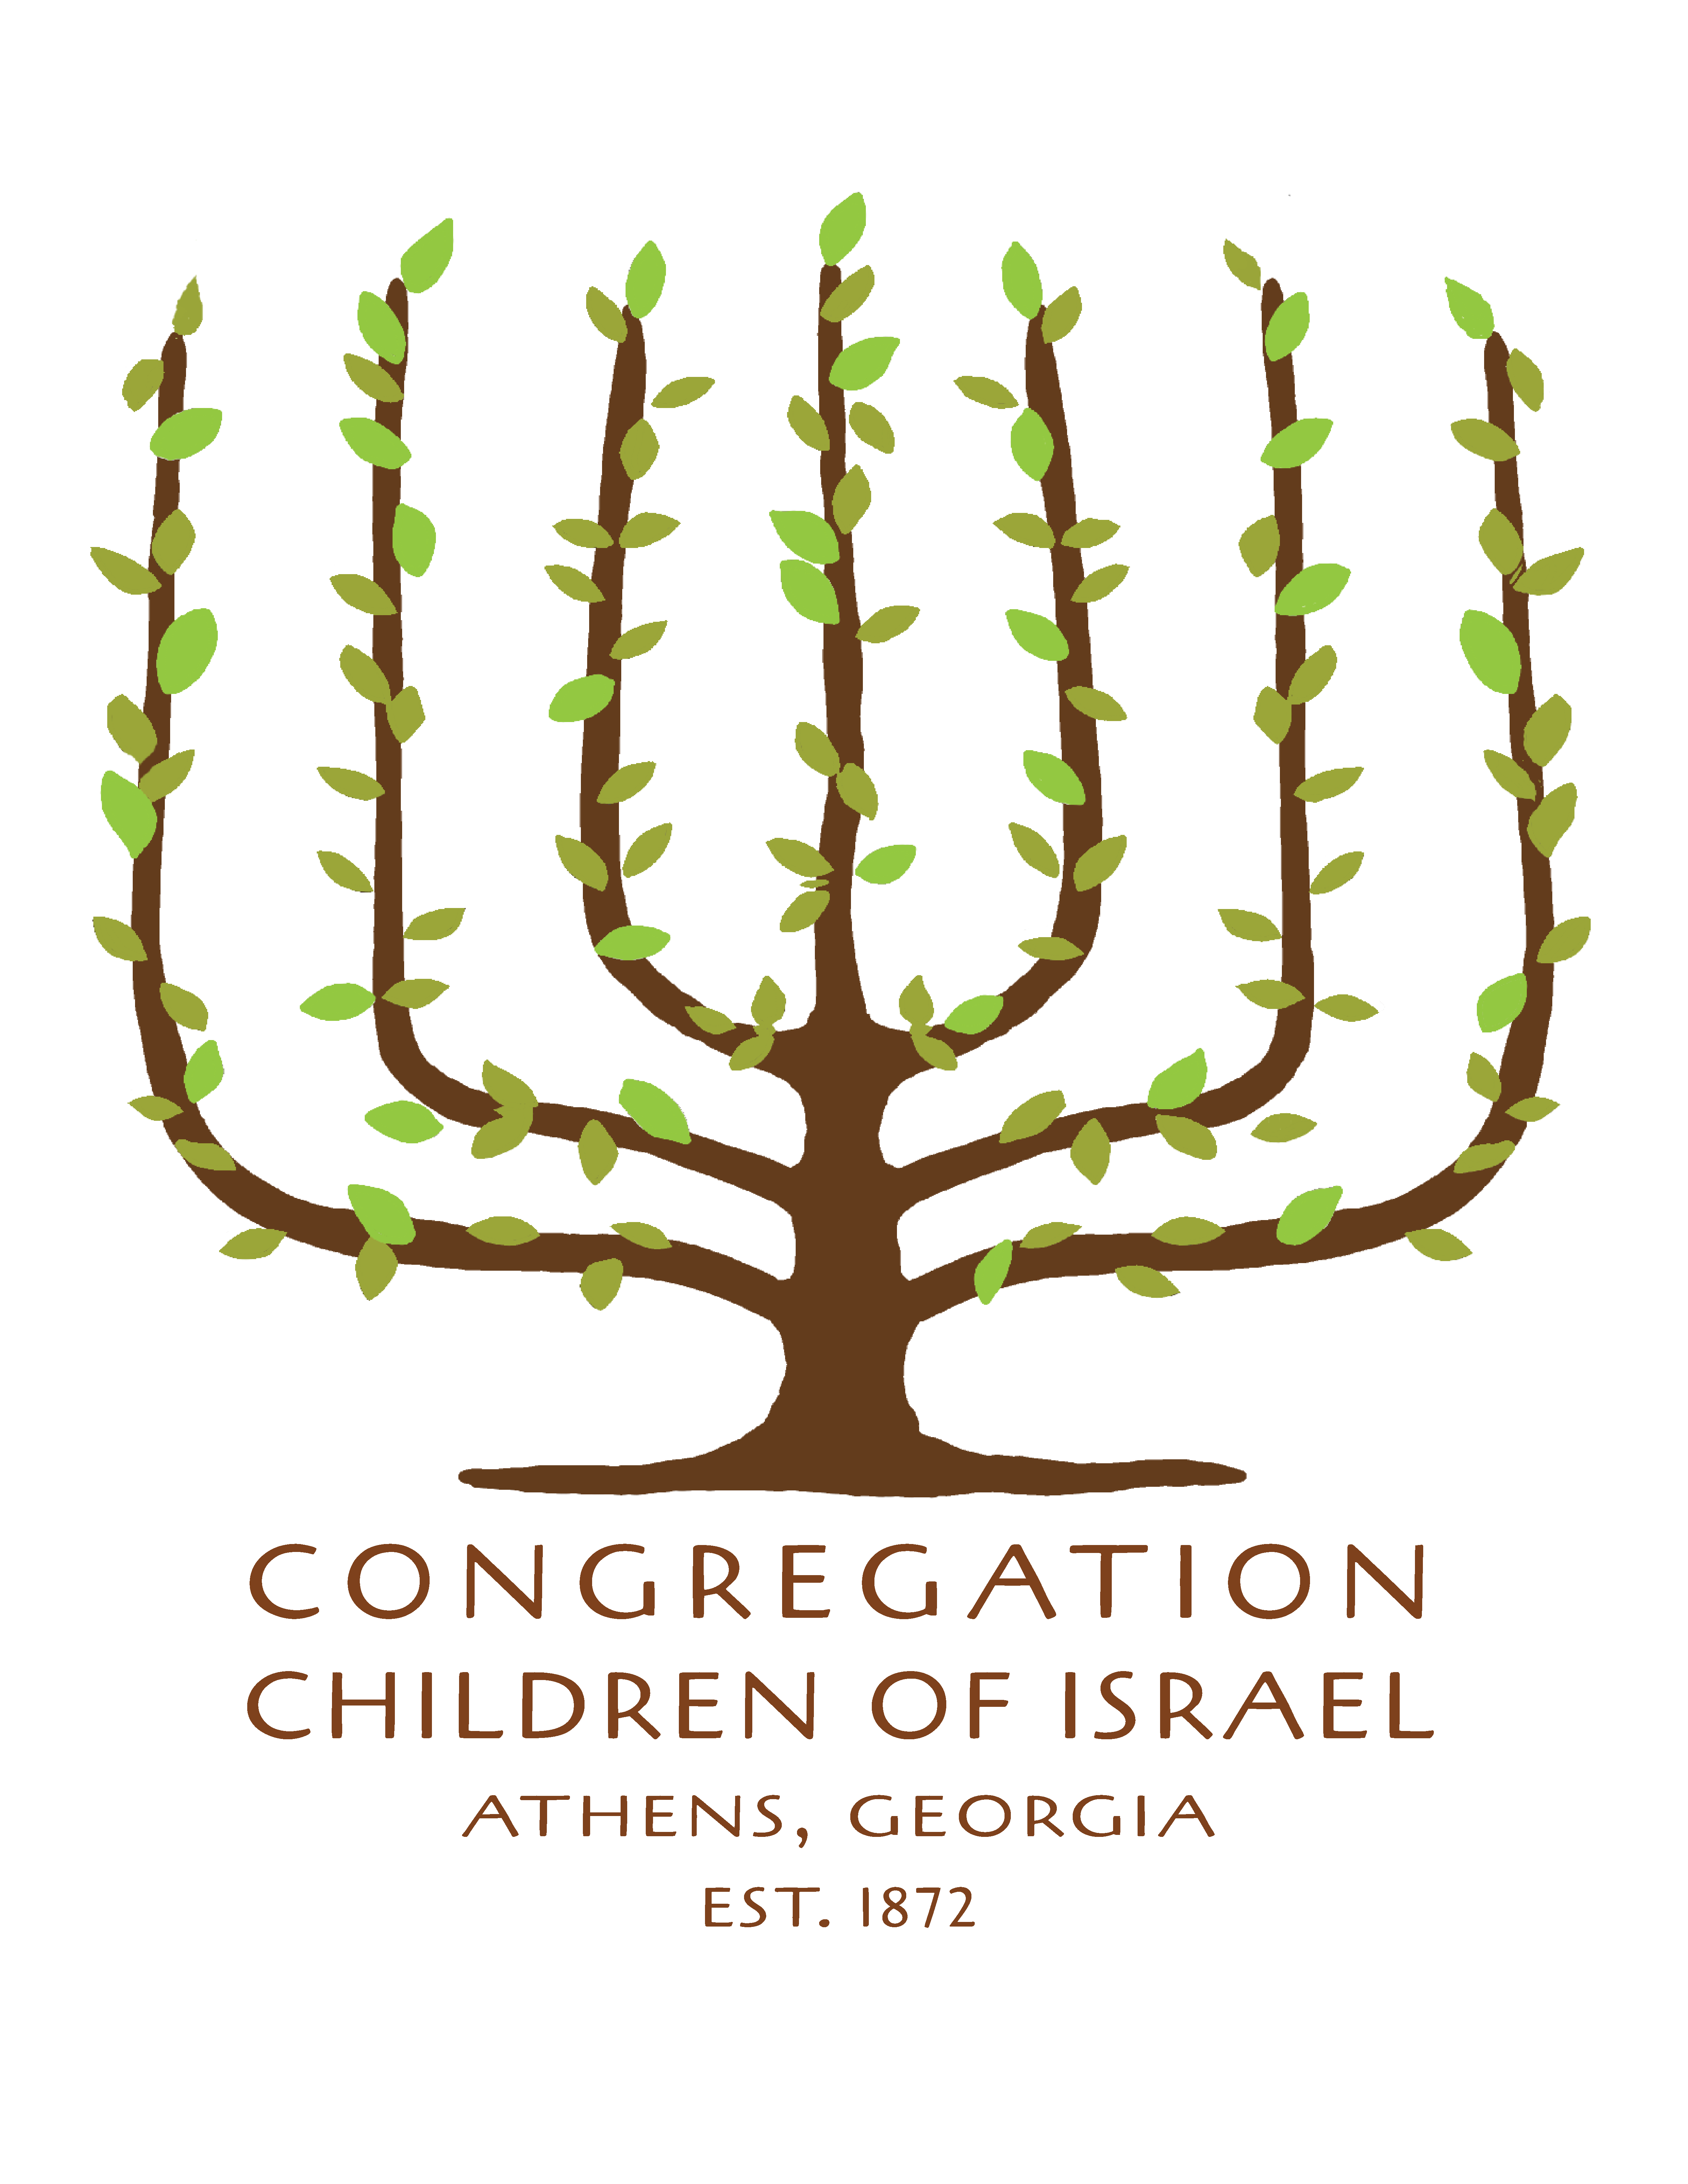 Children of Israel, Athens Georgia